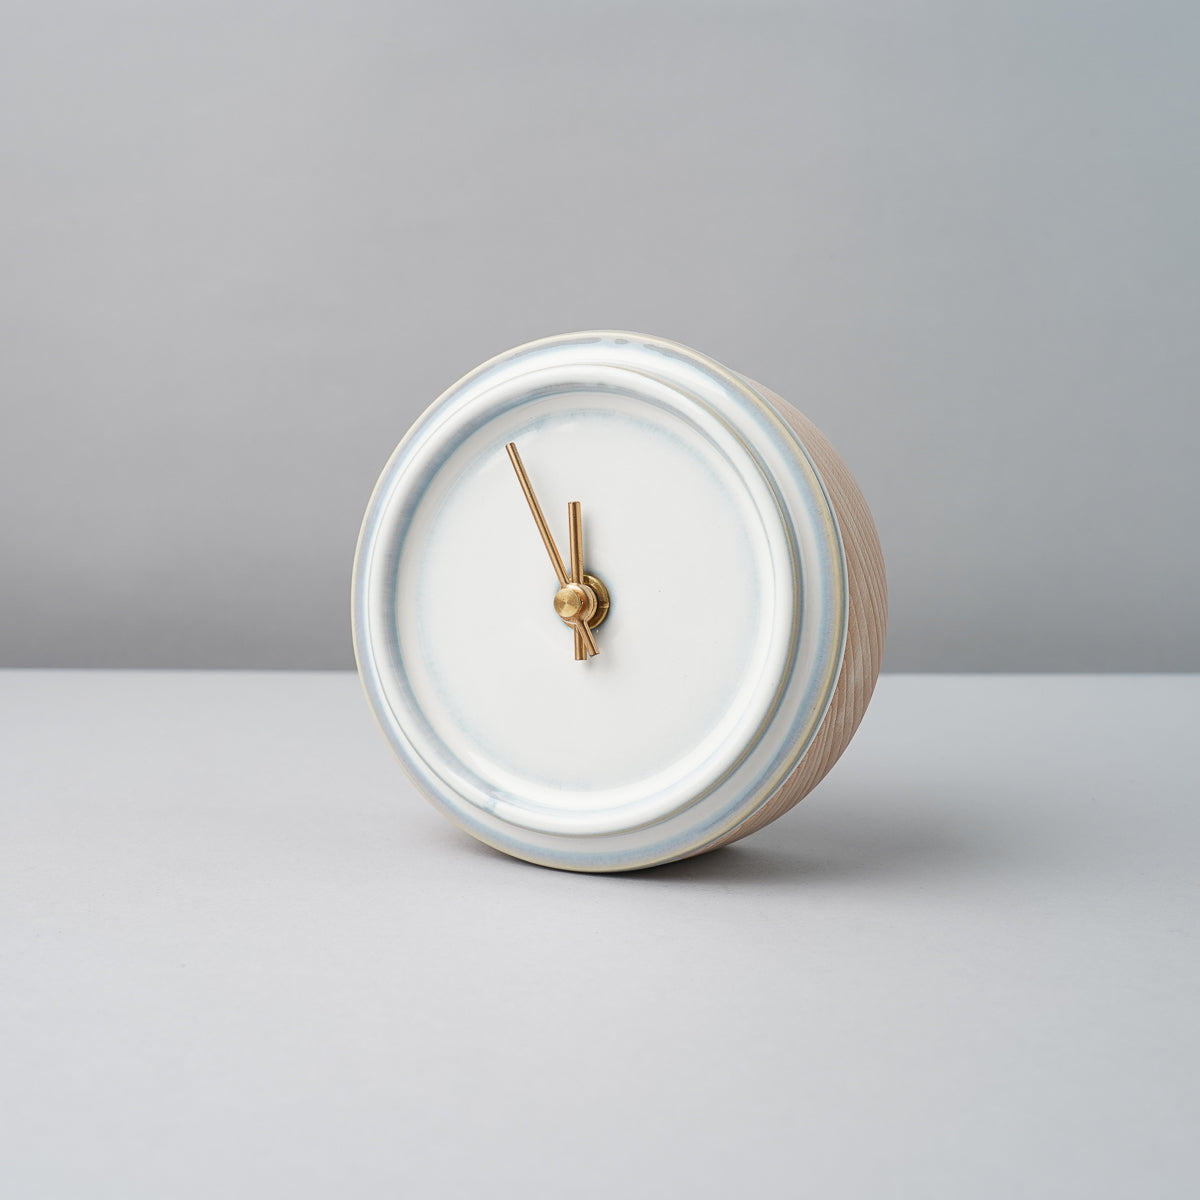 美濃焼 TILE WOOD CLOCK 陶器時計 置き時計 電池付 乳白釉(WZ-01) SUGY Studio1156